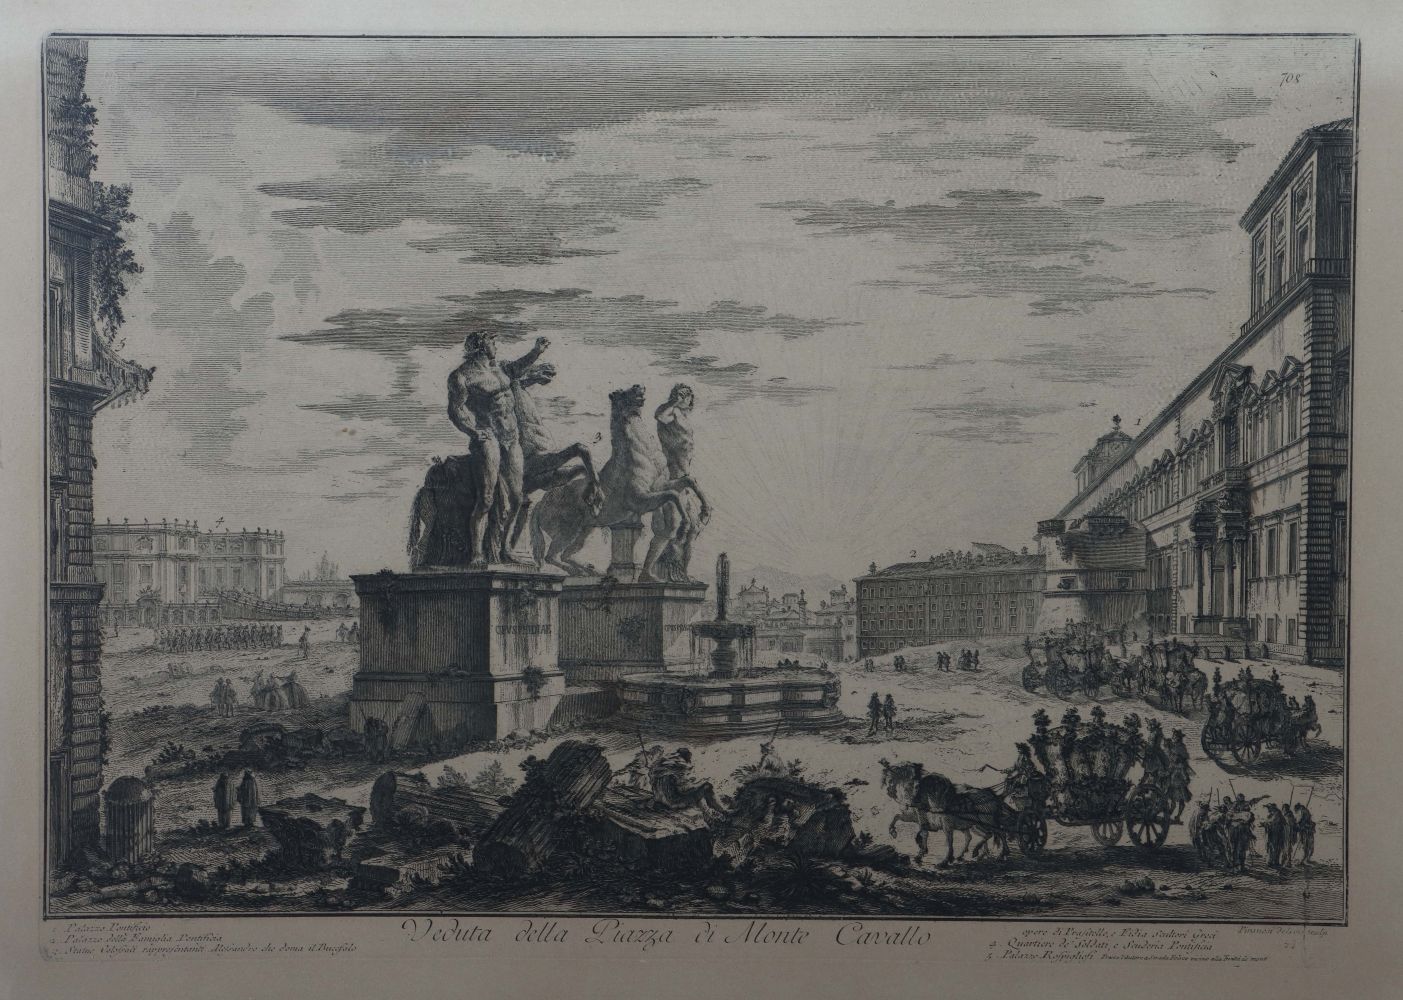 Piranesi, Giovanni Battista Venedig - Image 3 of 5